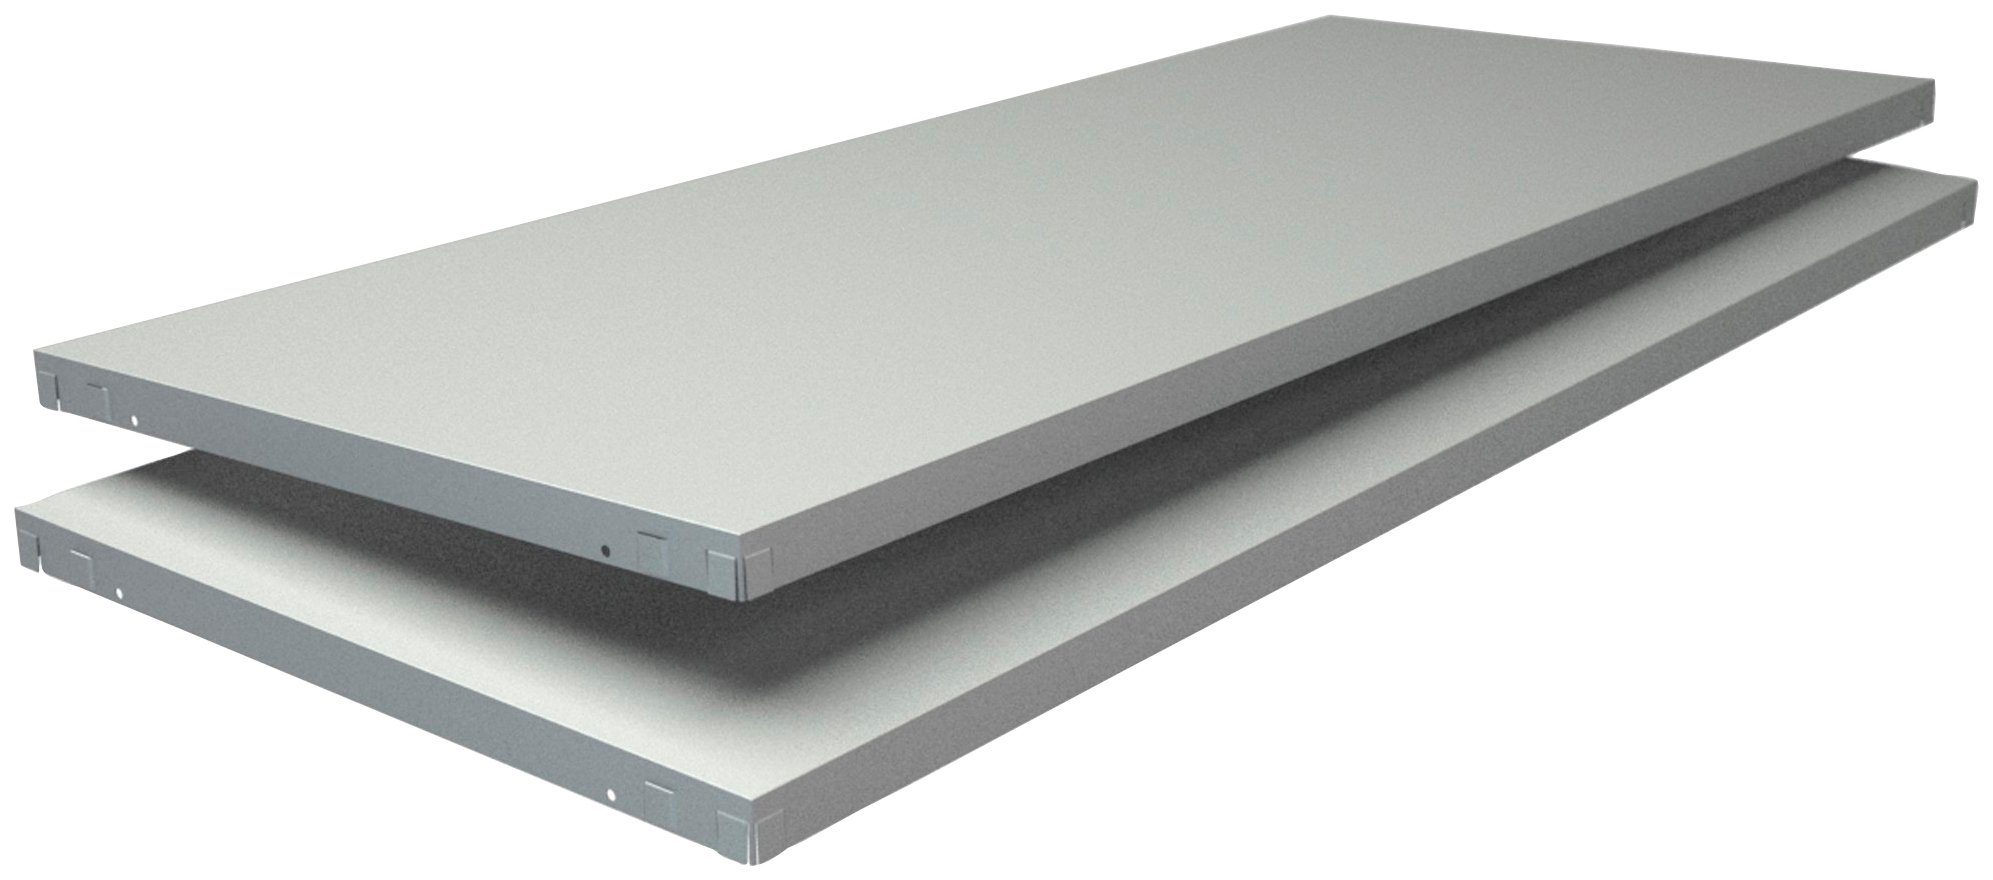 SCHULTE Regalwelt Regalelement Stecksystem-Fachboden PowerMax, 2 Stück weiß, 1200x500 mm | Regalsysteme